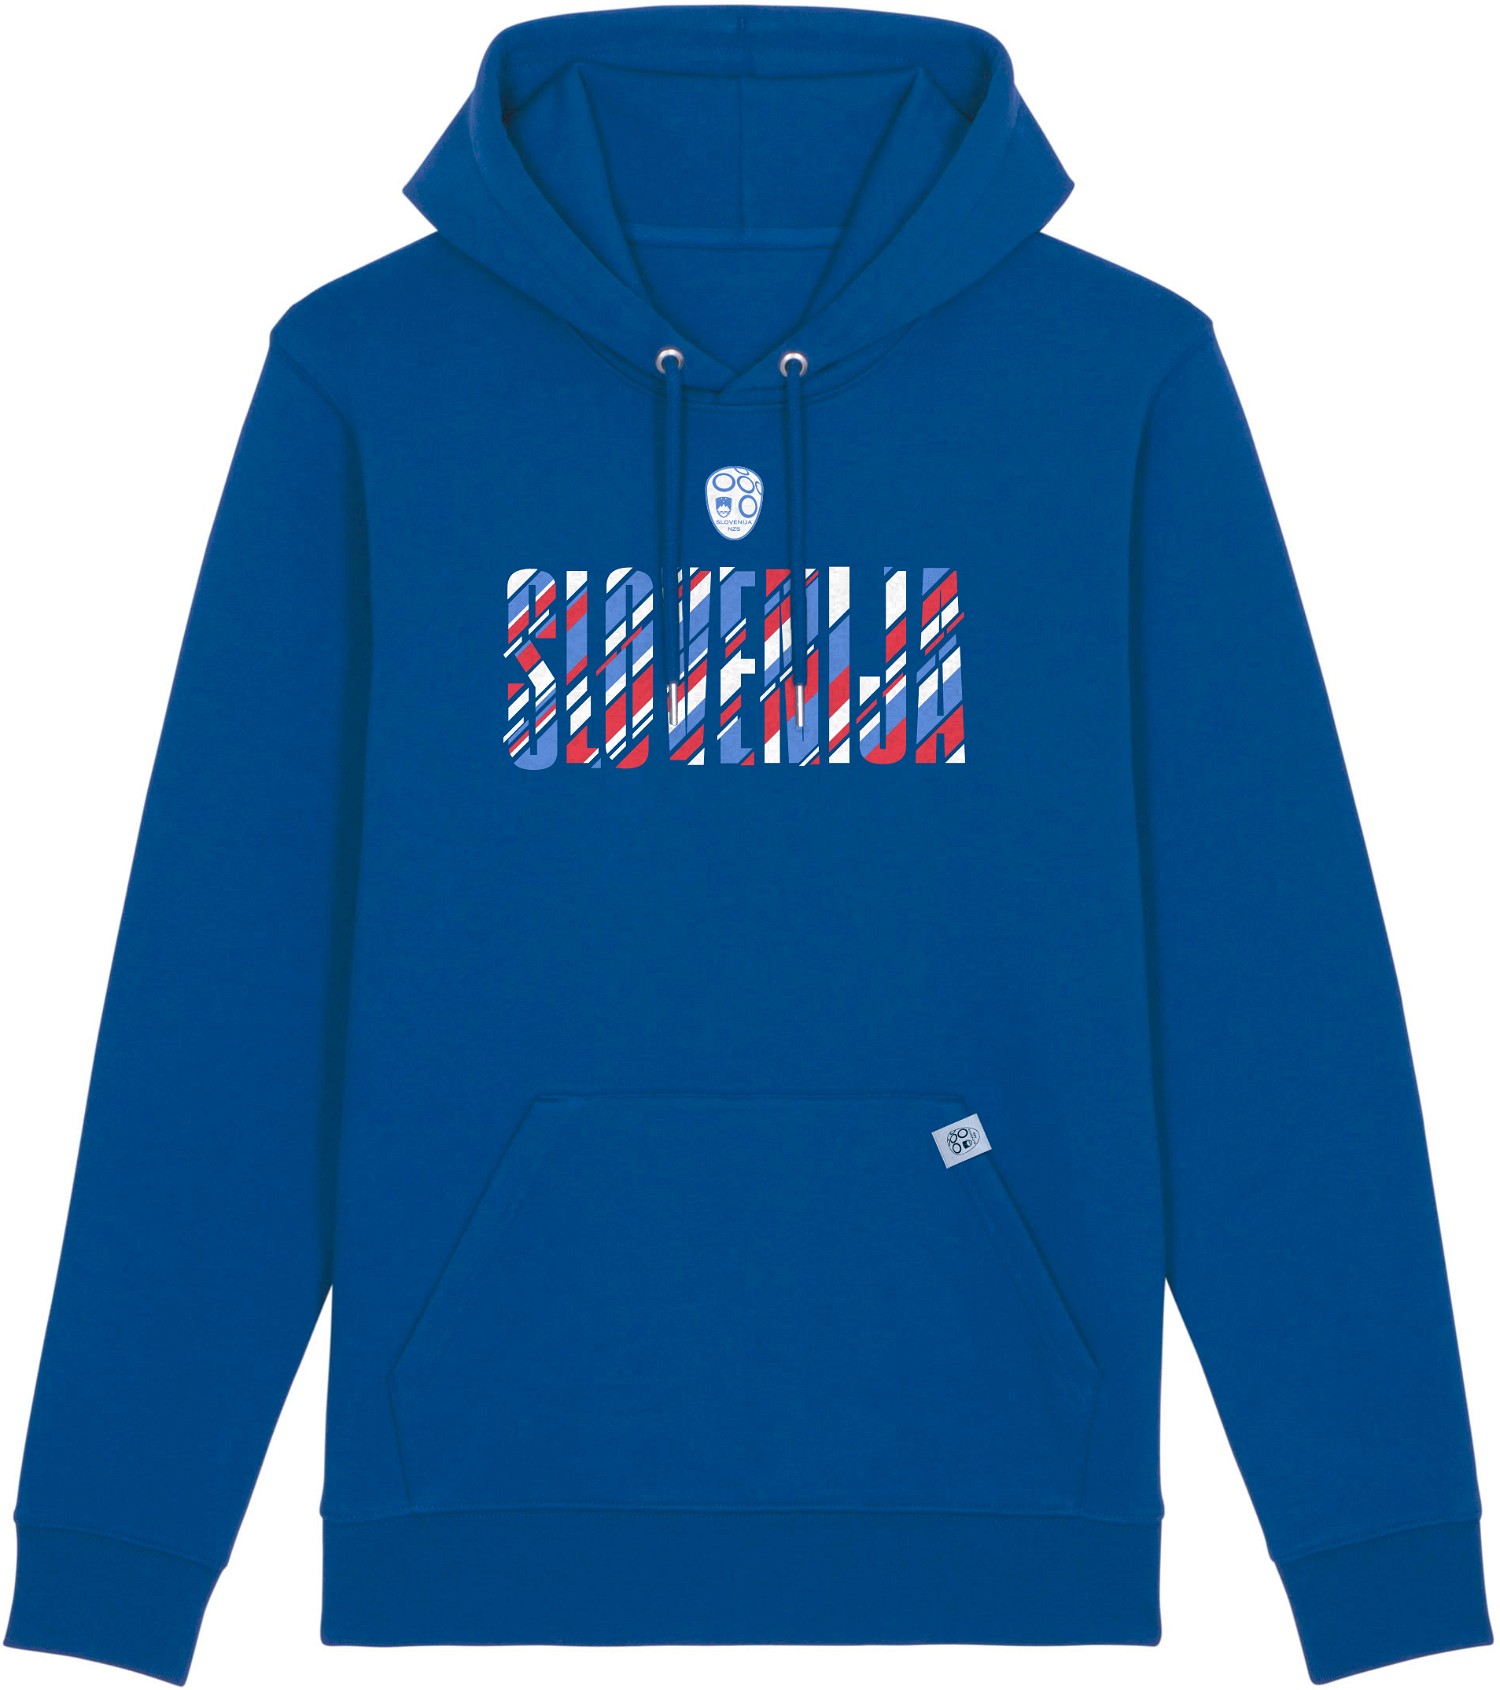 Sweatshirt Nike NZSx11TS SRCE BIJE UNISEX blue hoody Sötétkék | nzsnzs700-463, 0